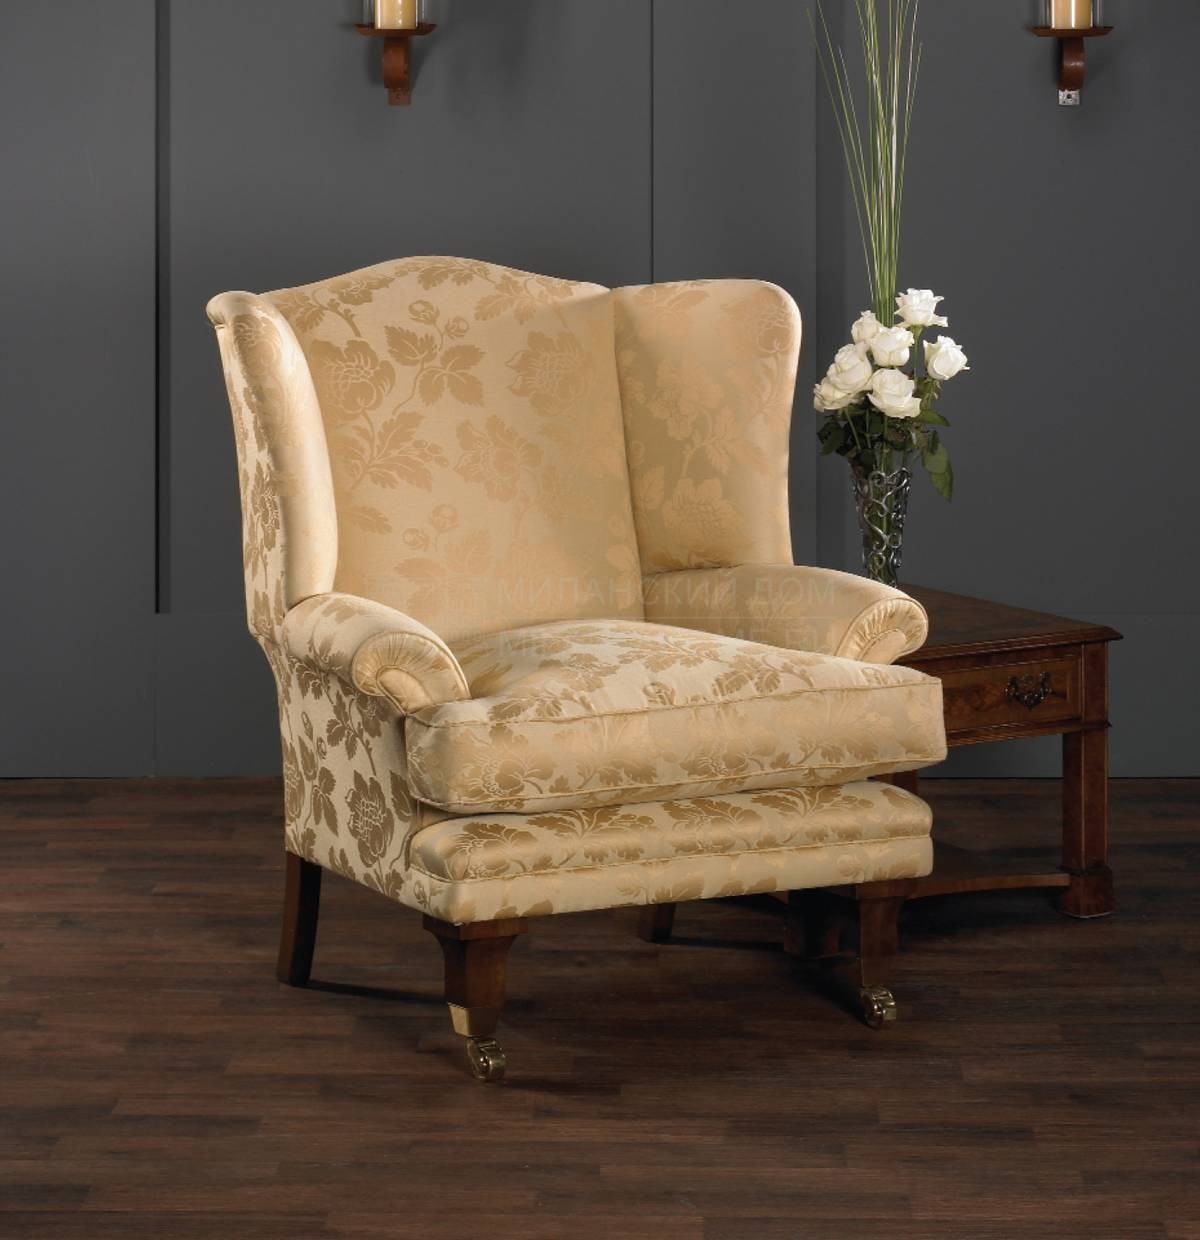 Каминное кресло Eaton/armchair из Великобритании фабрики DAVID GUNDRY